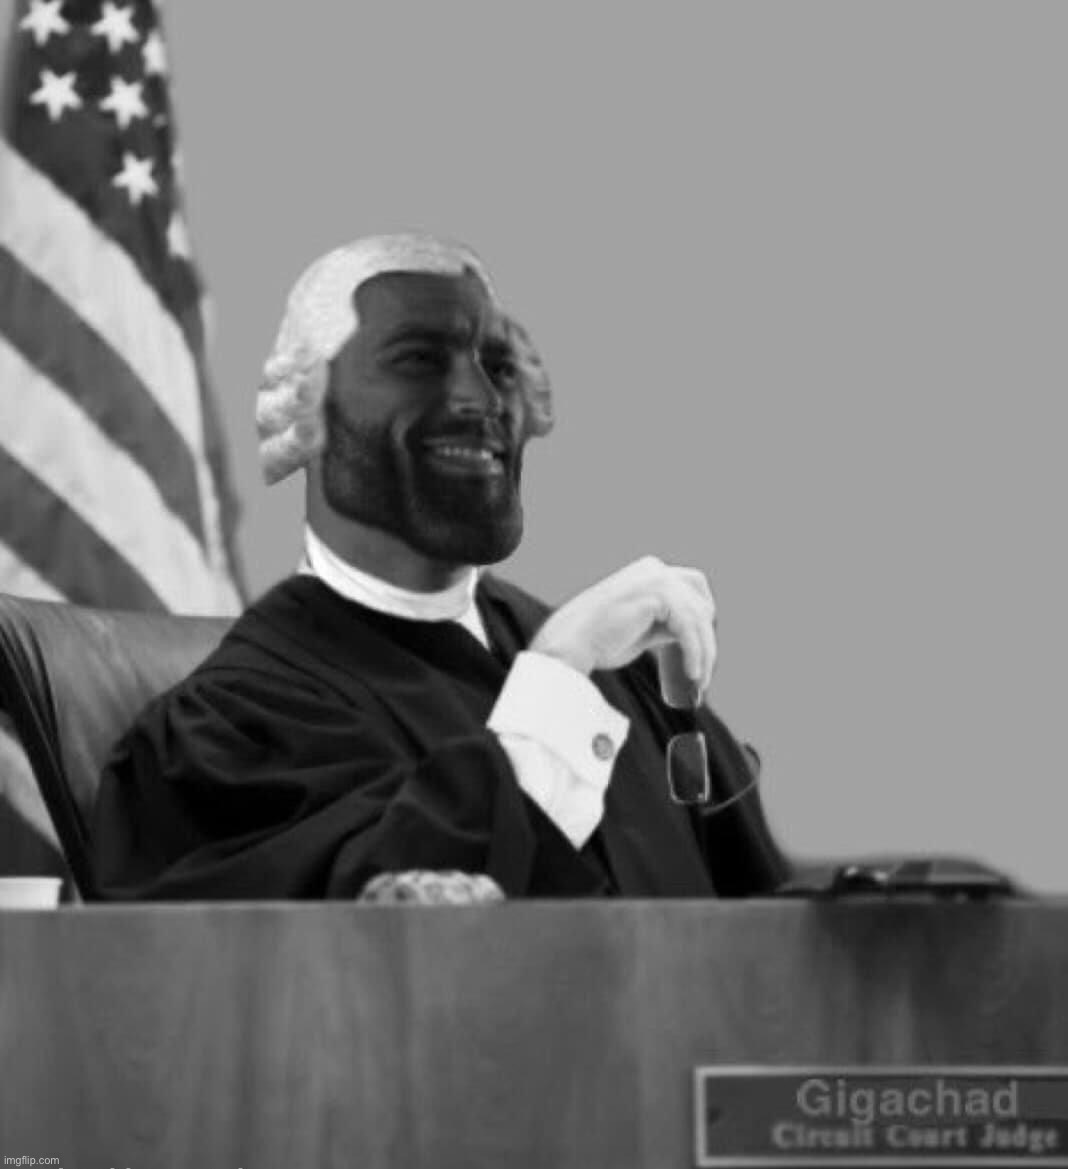 Gigachad judge | image tagged in gigachad judge,giga,chad,circuit,court,judge | made w/ Imgflip meme maker